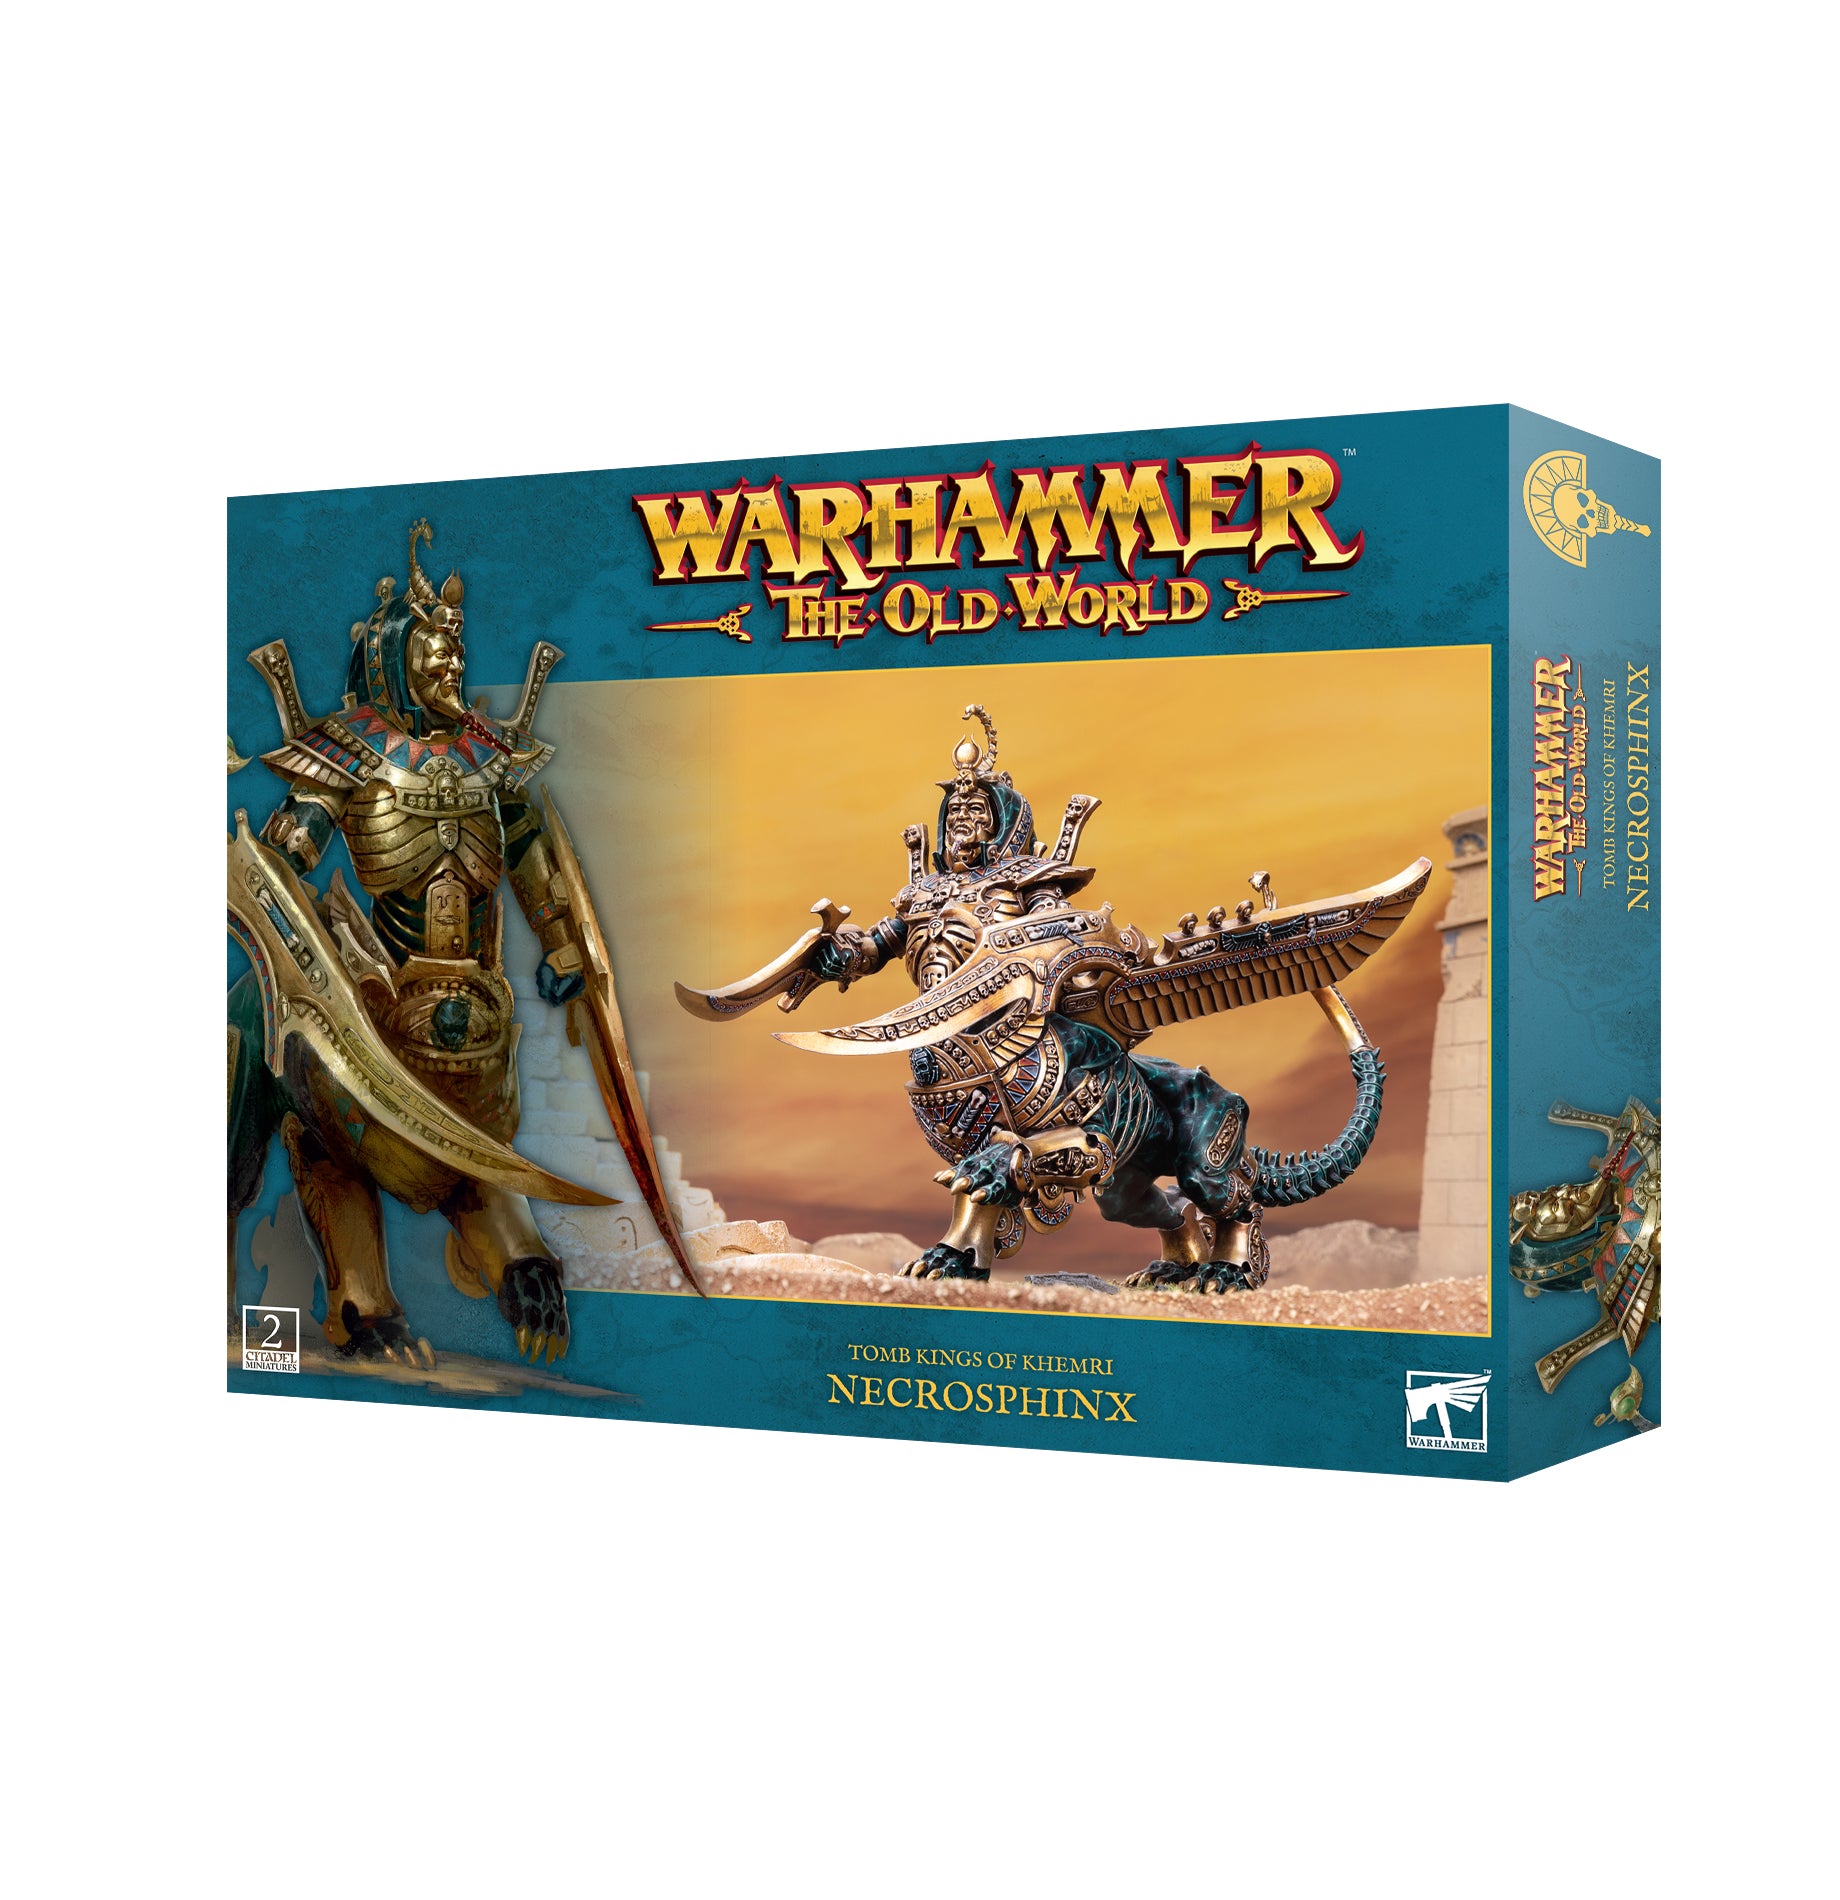 Warhammer: The Old World Tomb Kings of Khemri : Necrosphinx MKGRVY5CC4 |0|